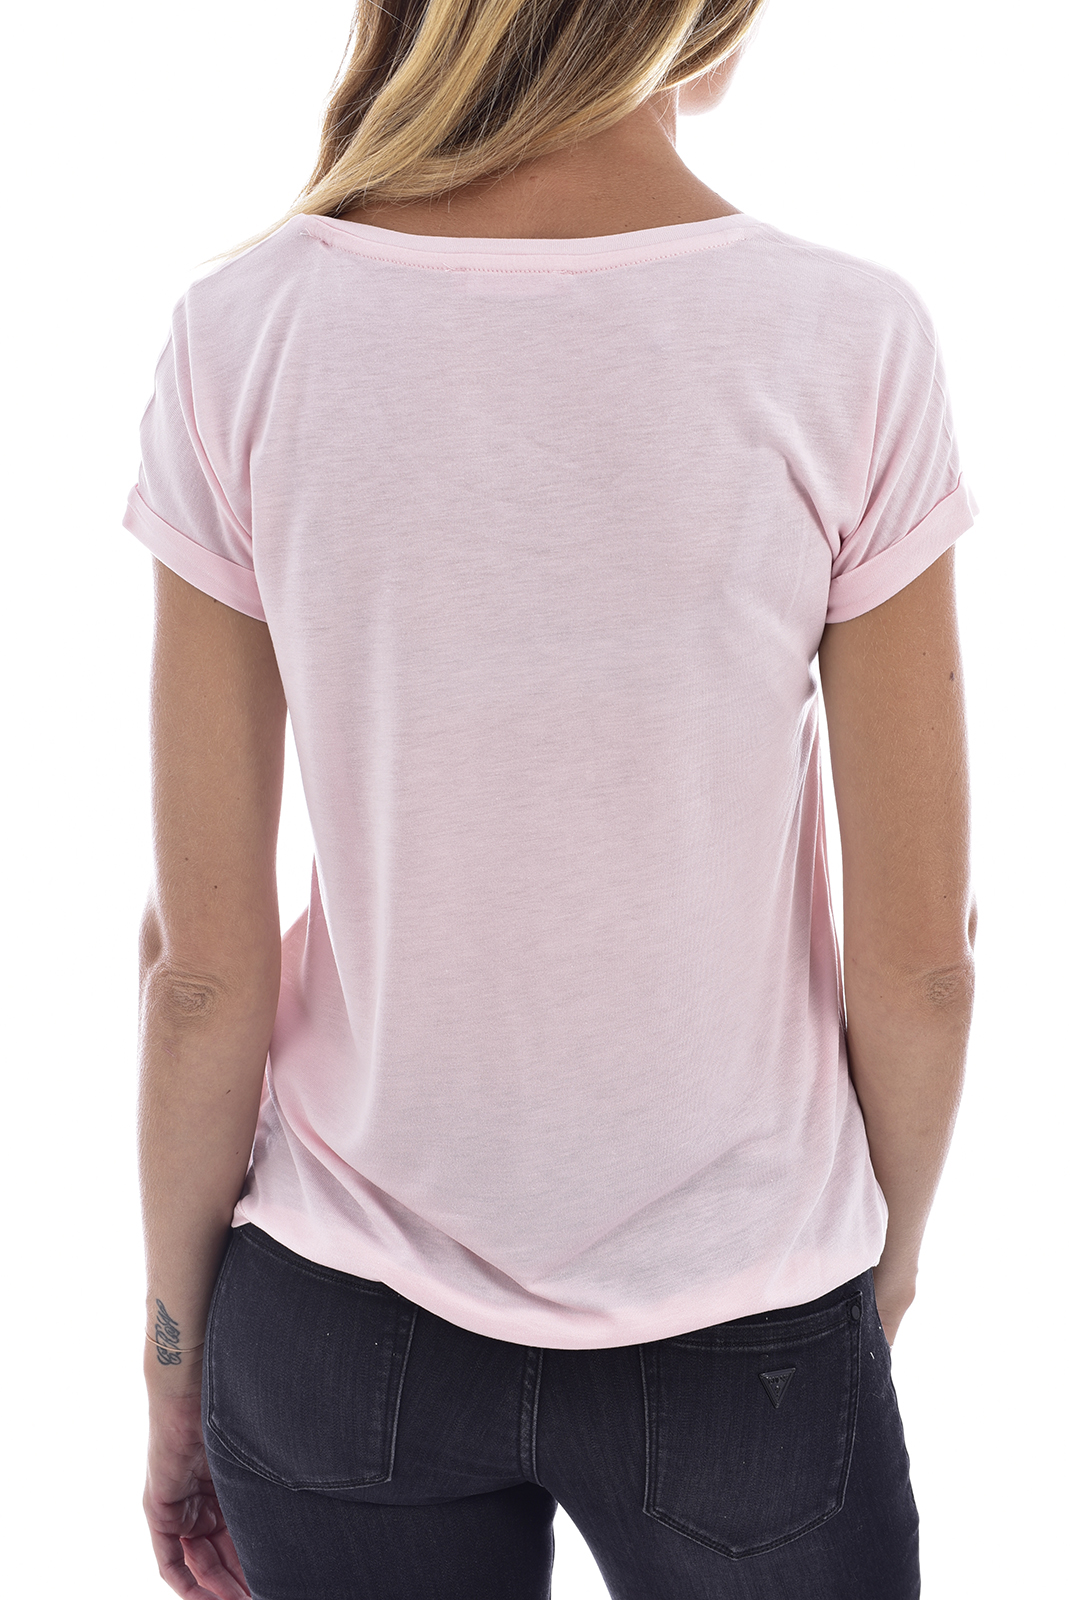 Tee-shirt rose fleuri pour femme Guess - W72i2k